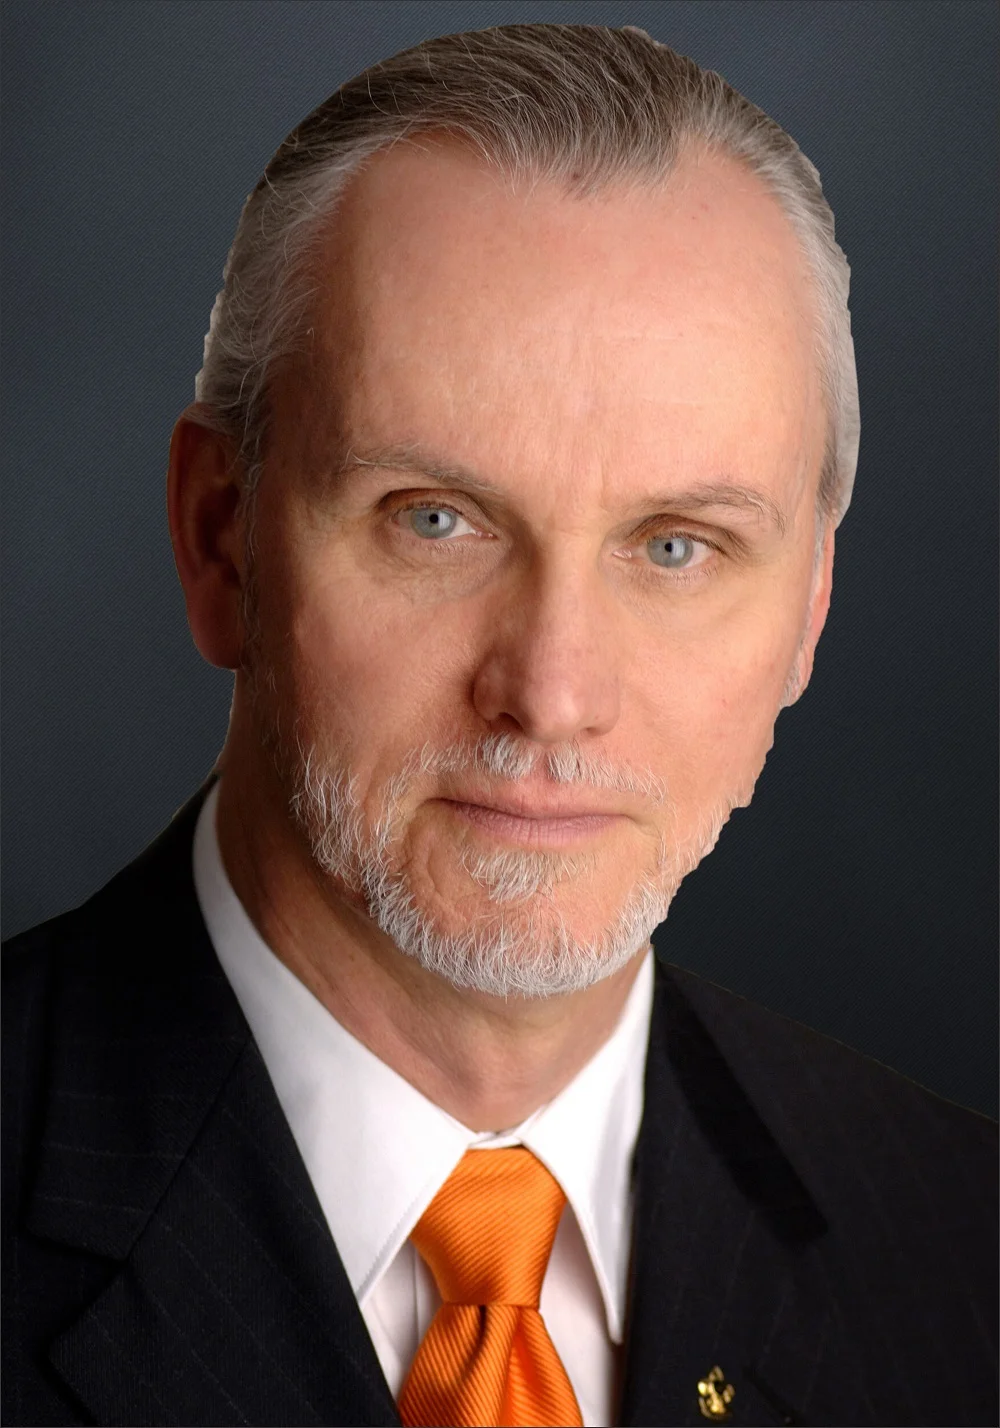 Richard Worzel